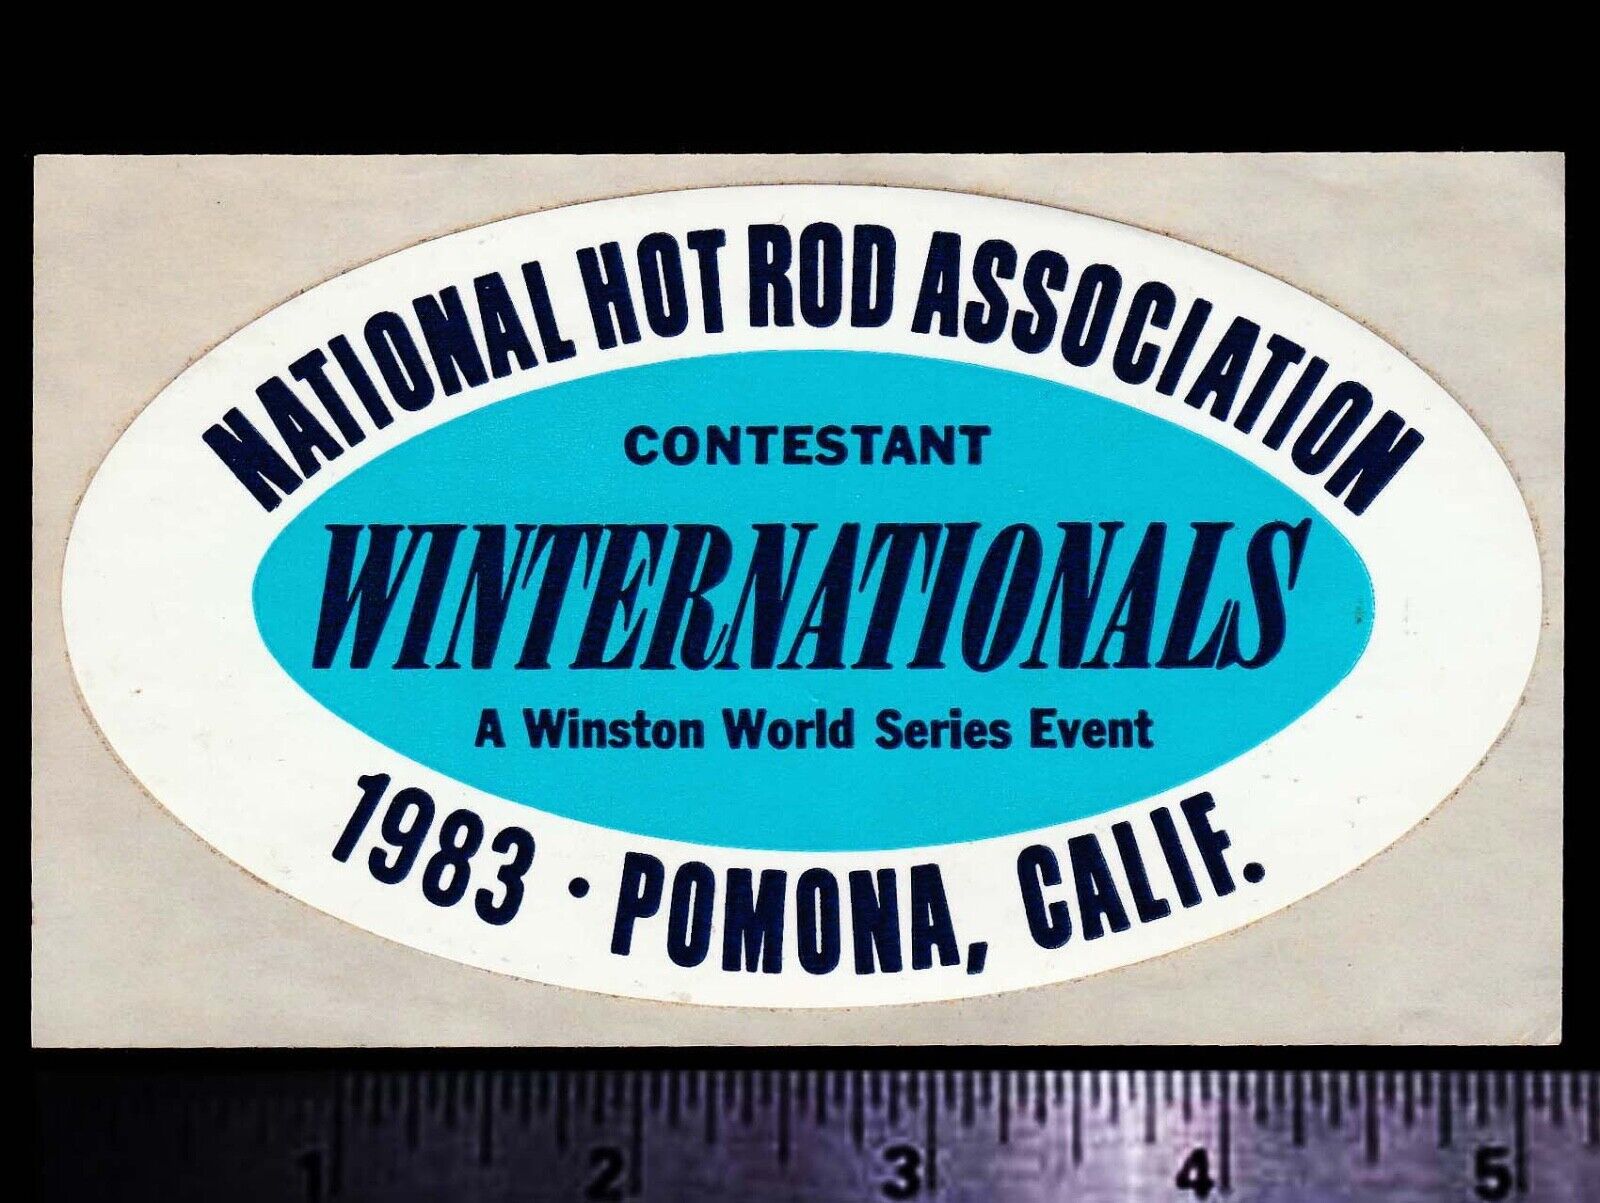 NHRA Winternationals Pomona Calif. 1983 - Original Vintage Racing Decal/Sticker